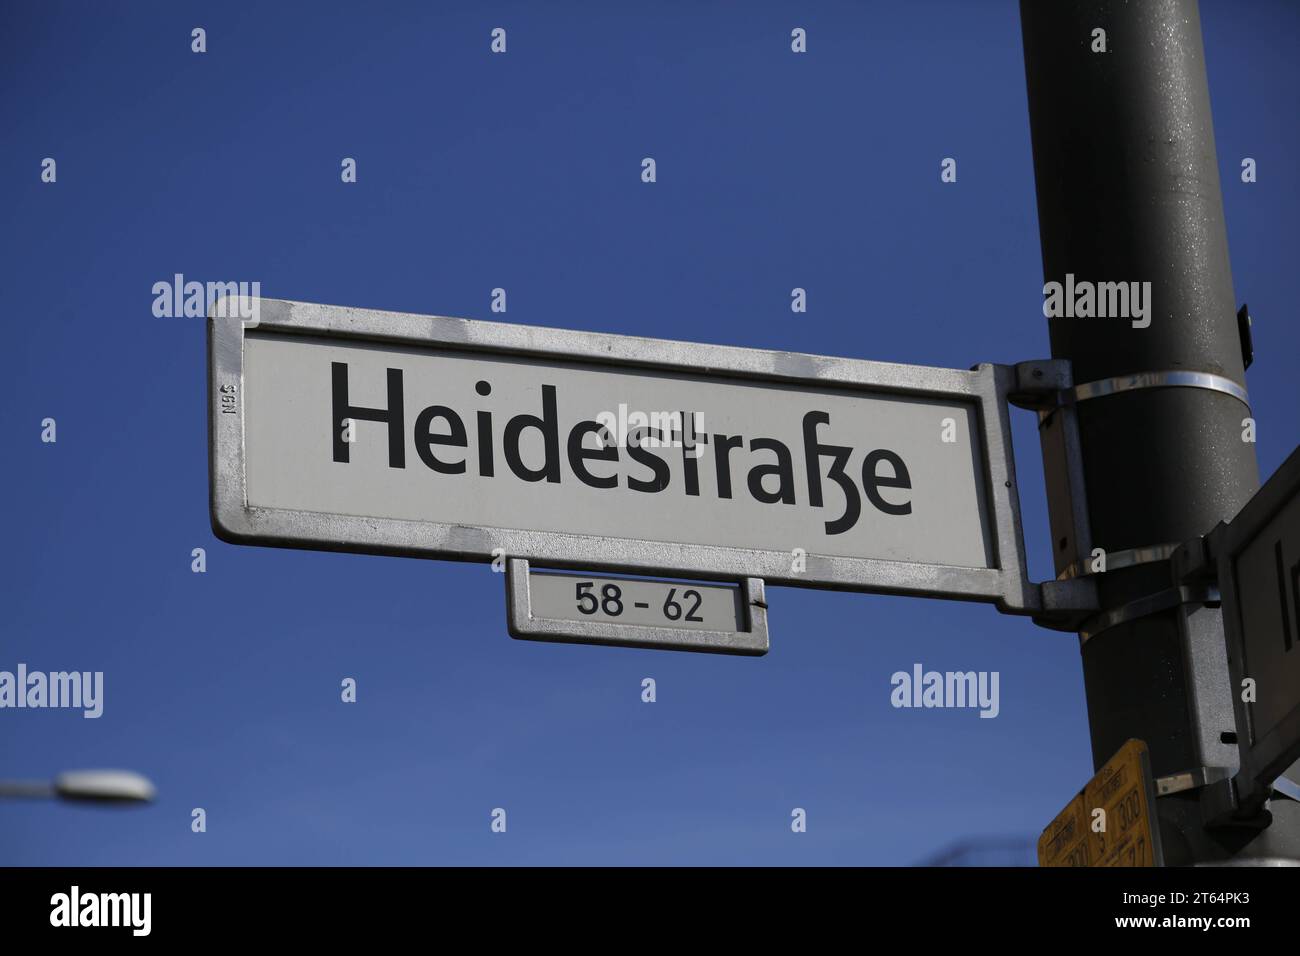 Heidestraße Straßenschild in Berlin *** Heidestraße street sign in Berlin Credit: Imago/Alamy Live News Stock Photo